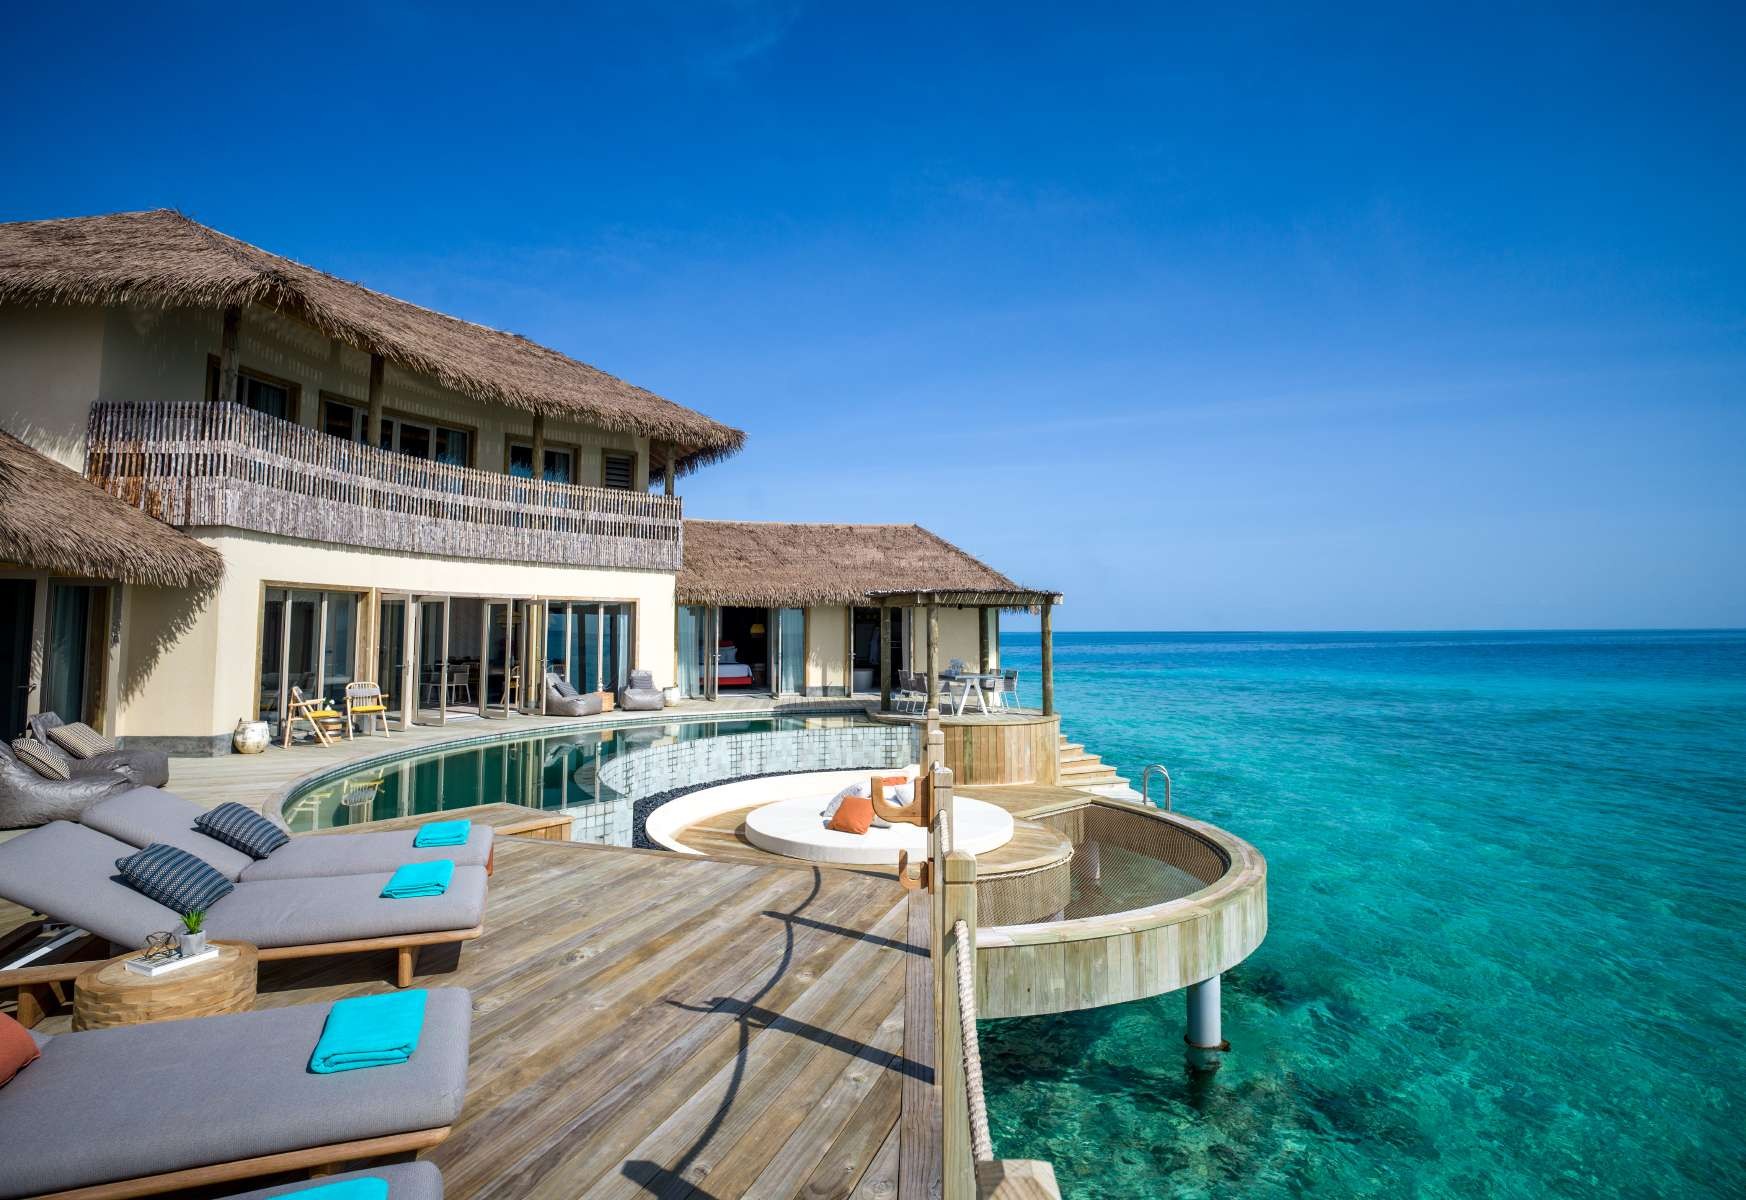 3-Bedroom Overwater Residence, Intercontinental Maldives 5*